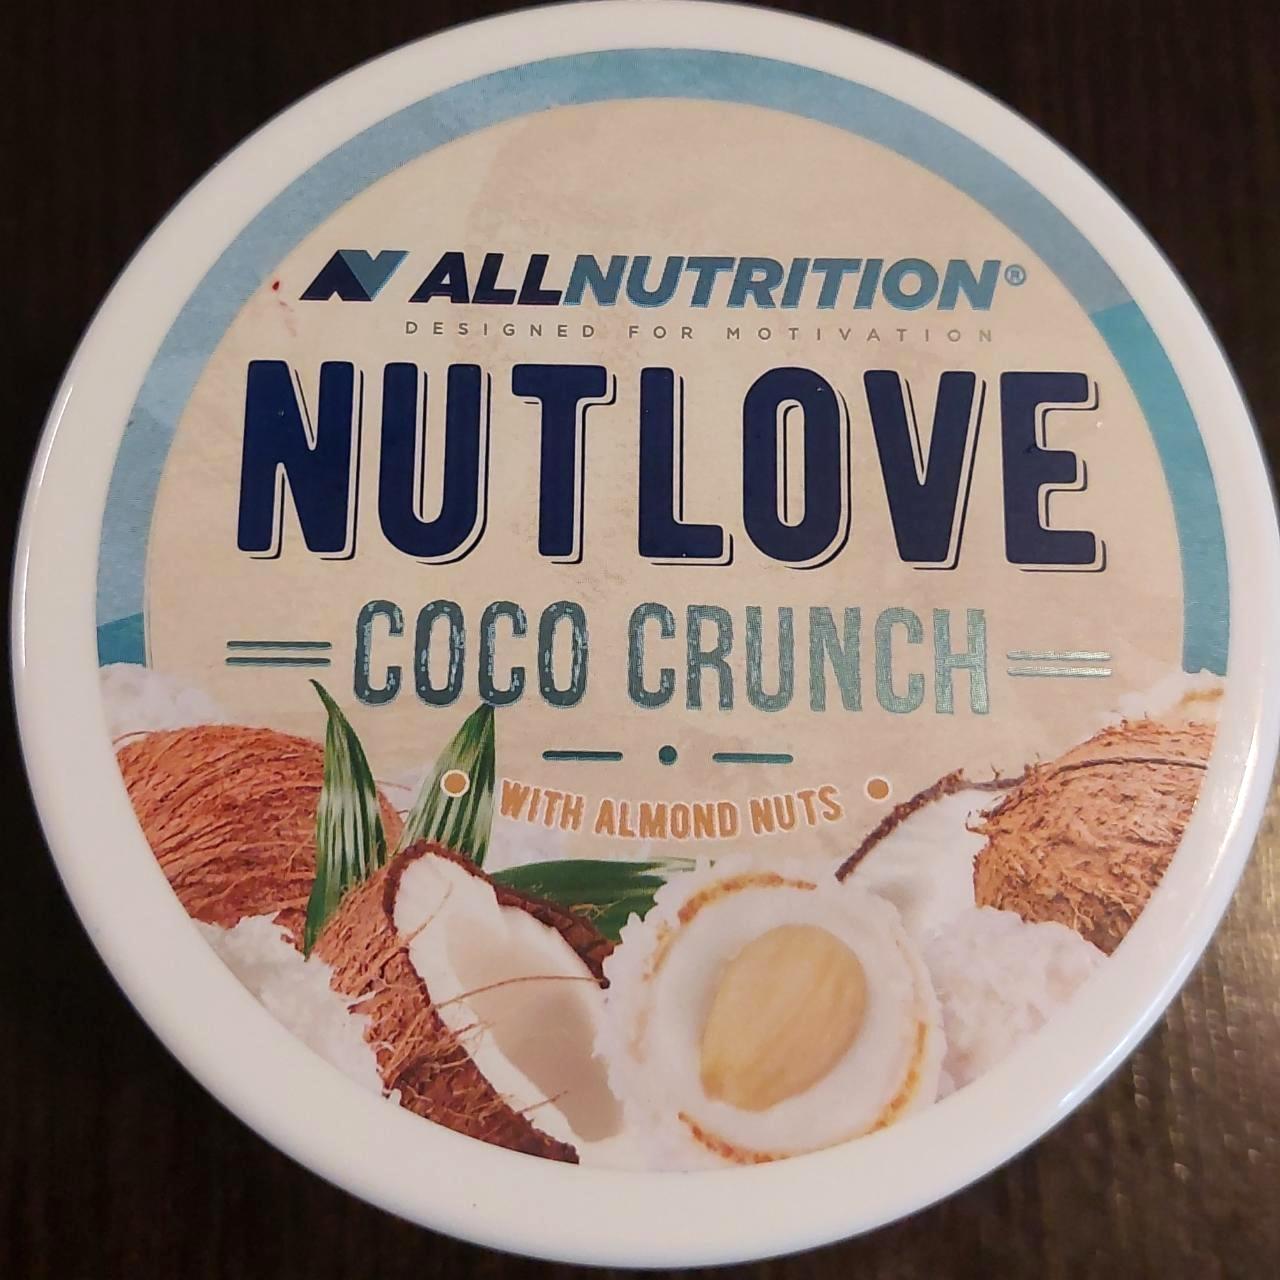 Képek - Nutlove Coco Crunch AllNutrition